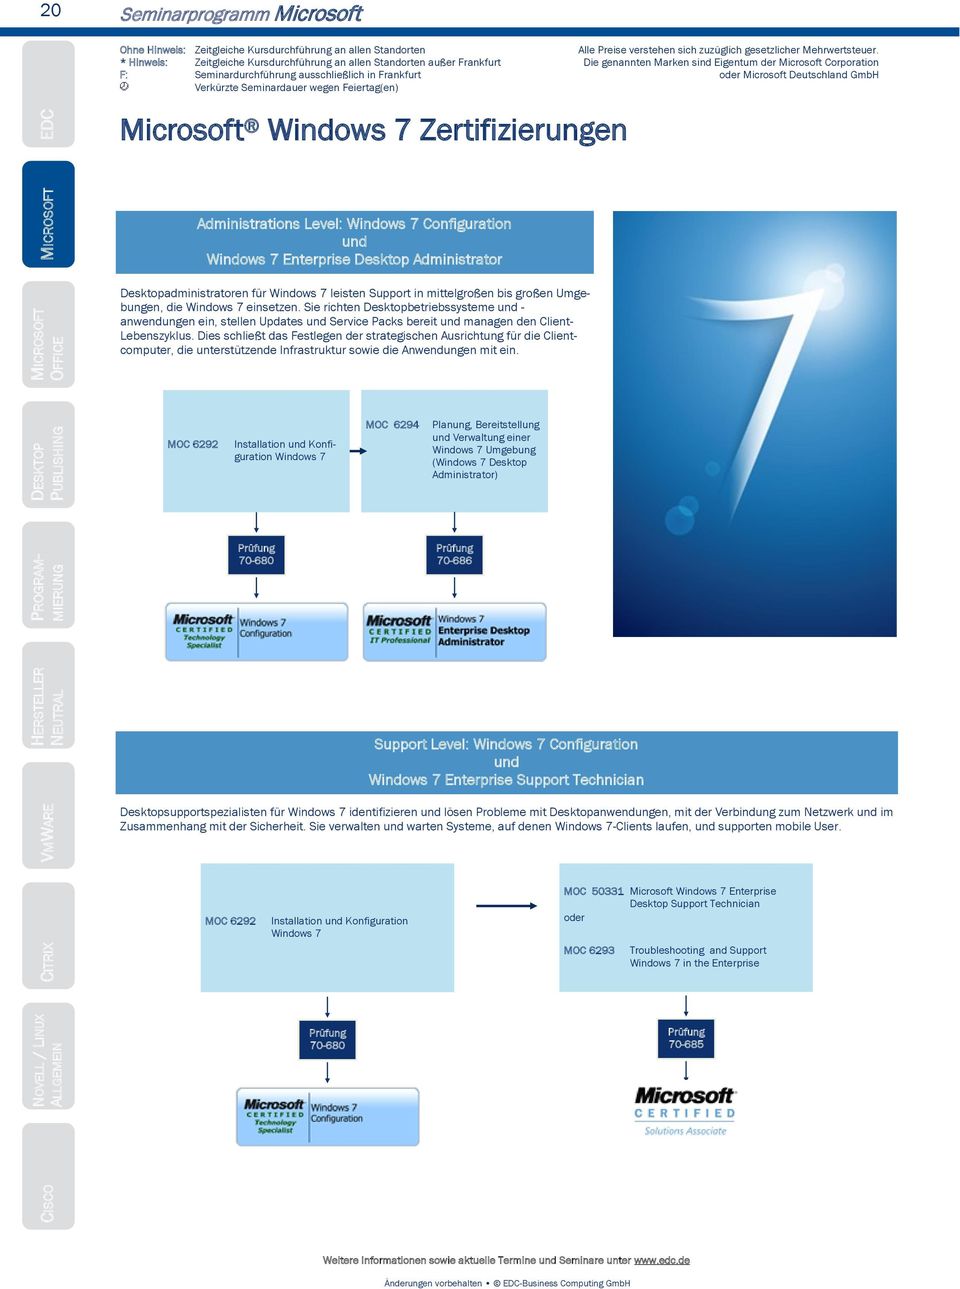 Microsoft Deutschland GmbH Verkürzte Seminardauer wegen Feiertag(en) Microsoft Windows 7 Zertifizierungen Administrations Level: Windows 7 Configuration und Windows 7 Enterprise Desktop Administrator